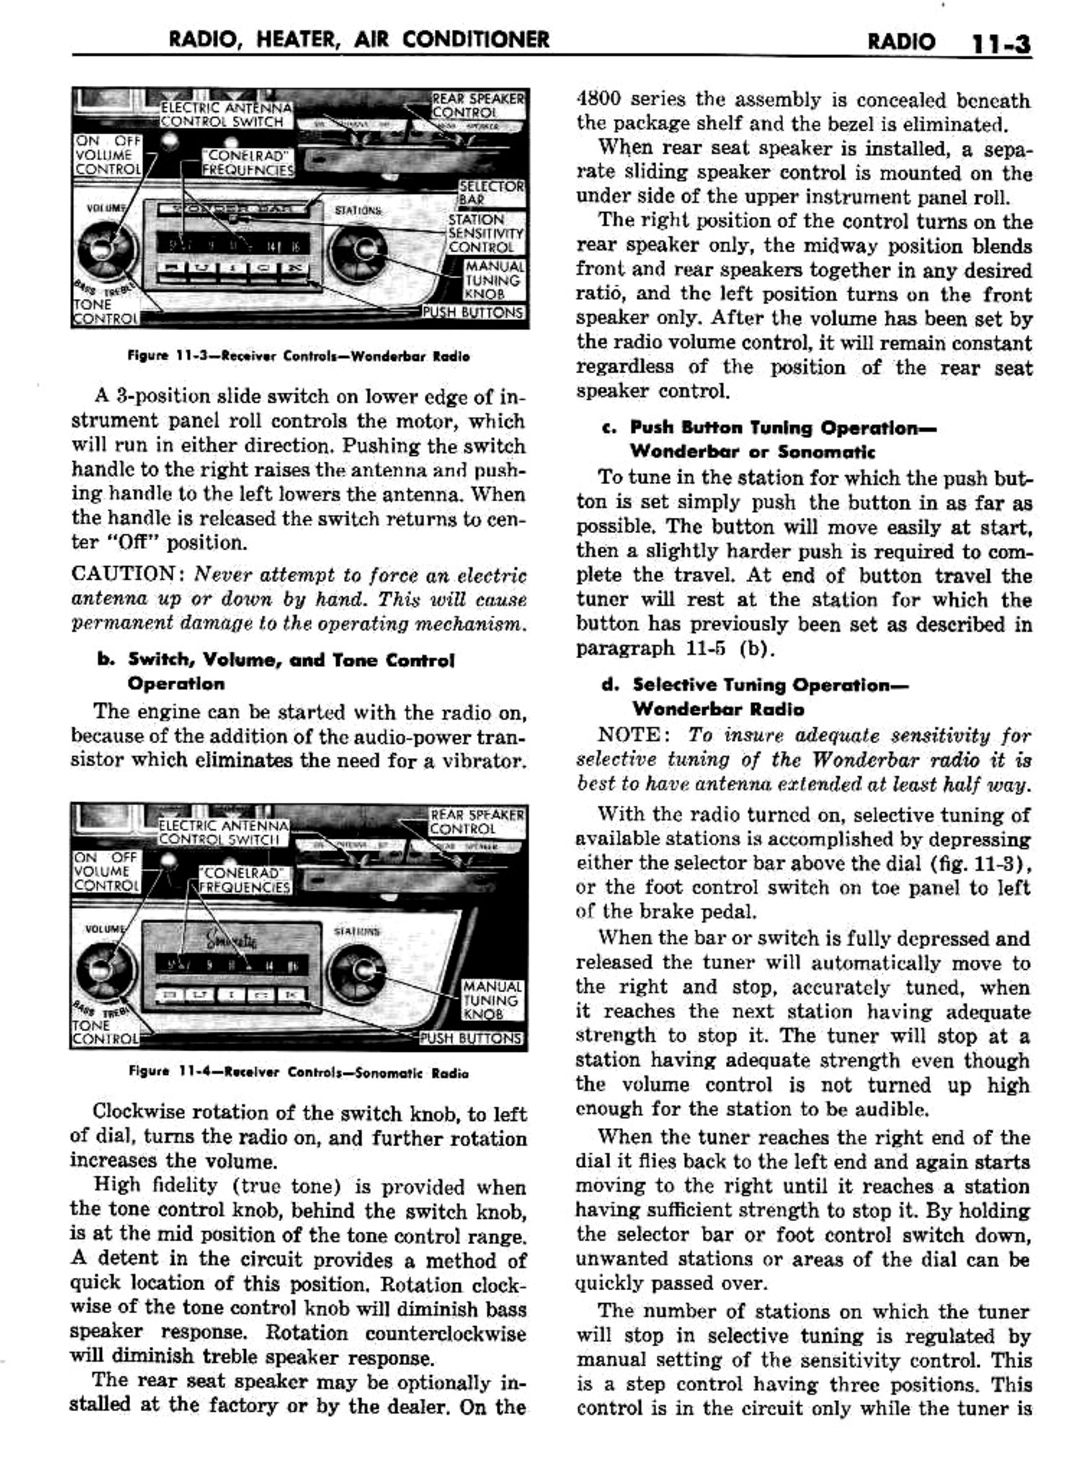 n_12 1960 Buick Shop Manual - Radio-Heater-AC-003-003.jpg